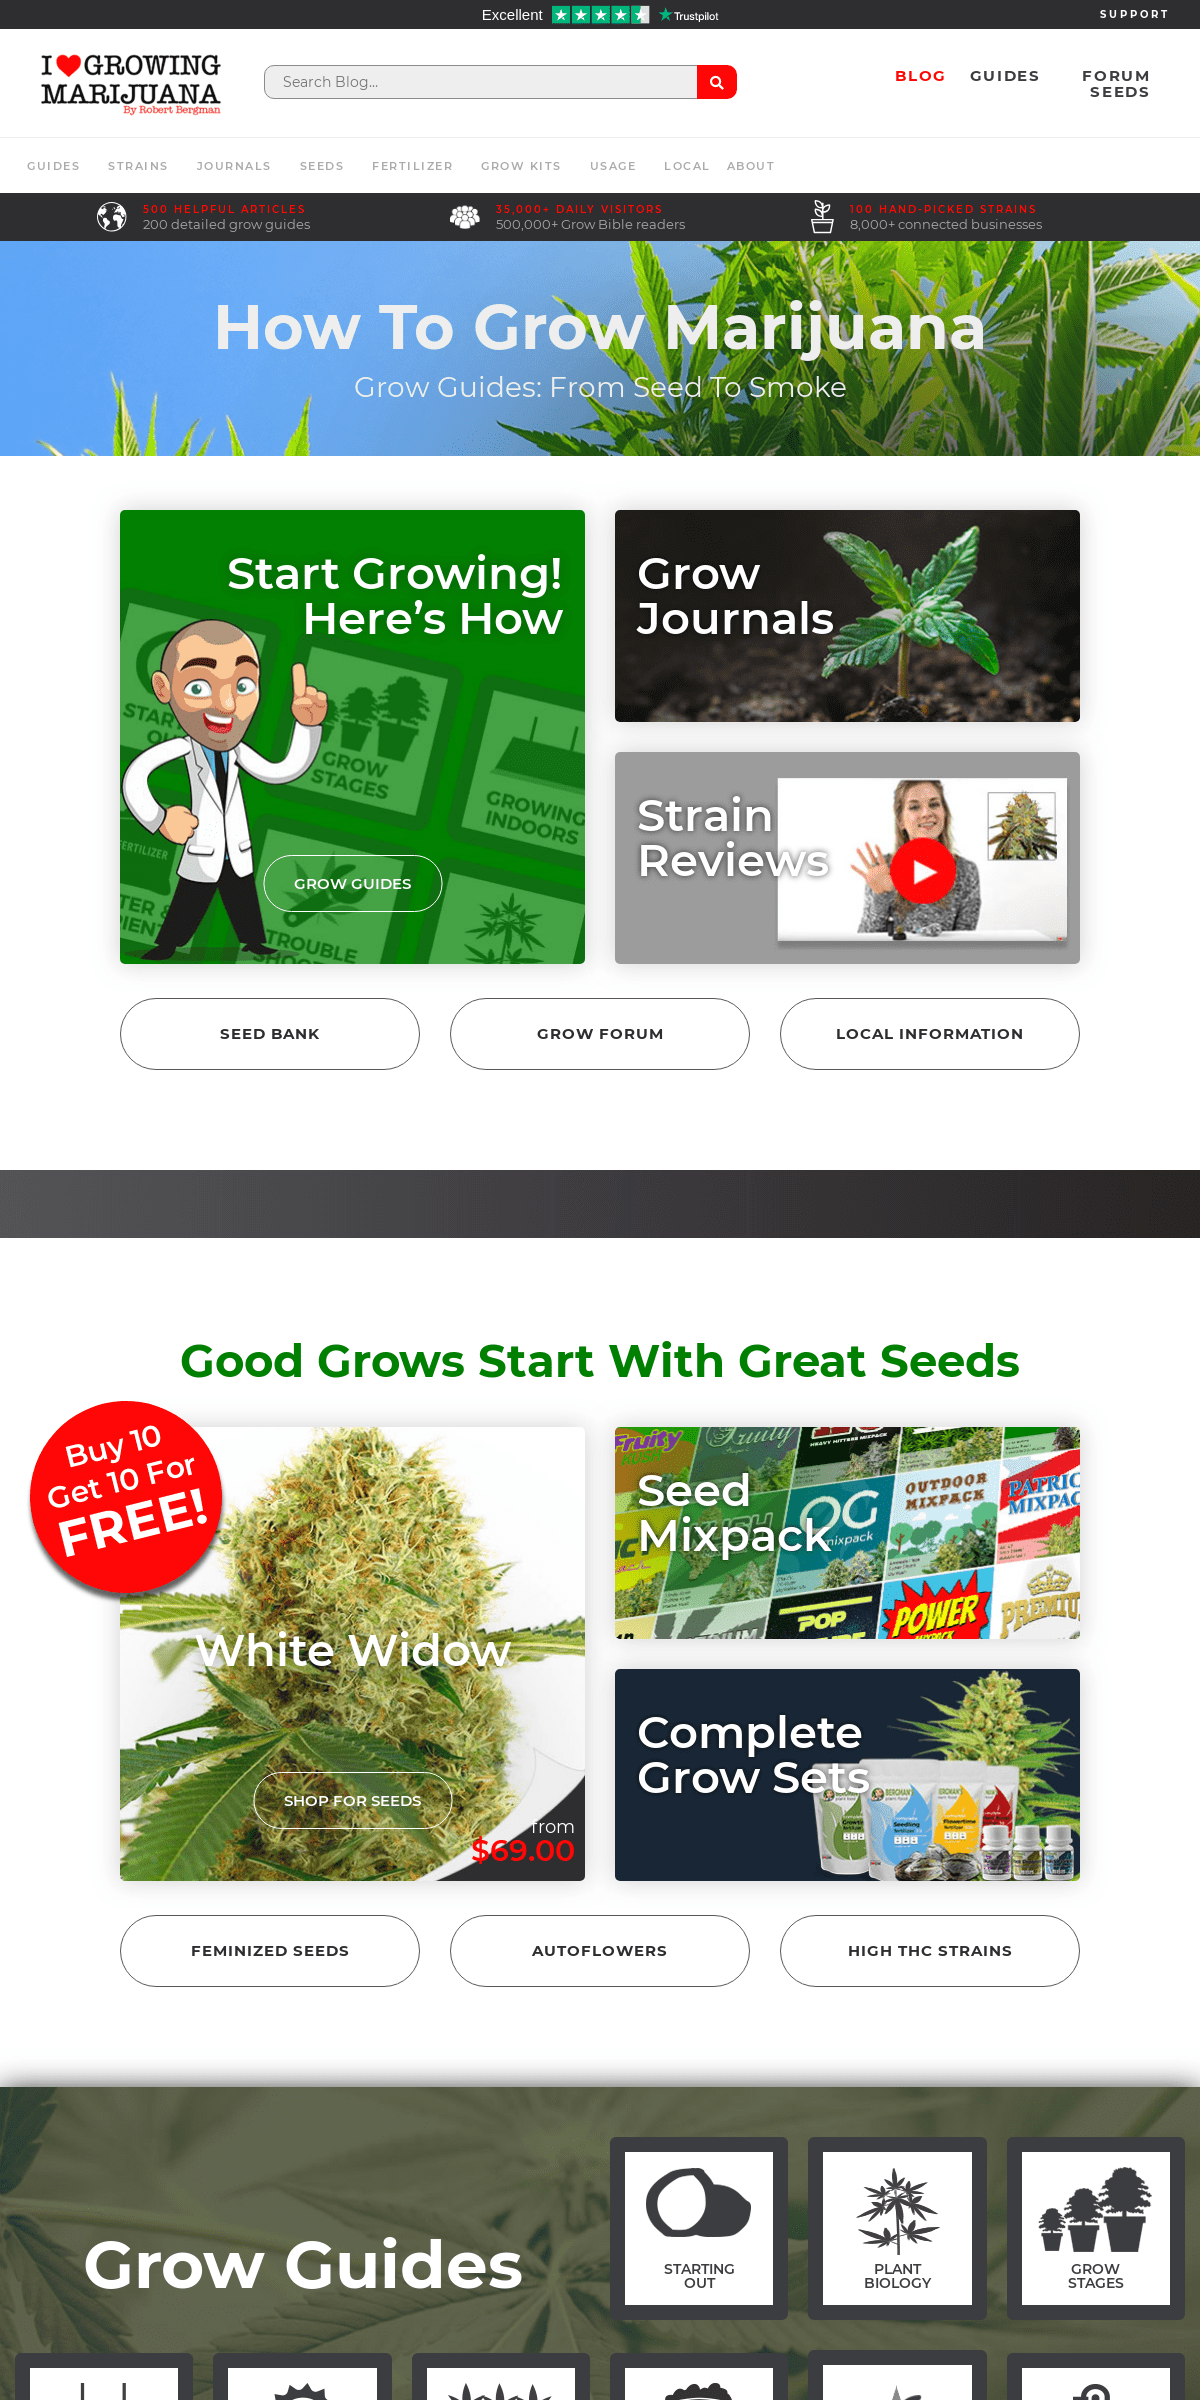 A complete backup of ilovegrowingmarijuana.com